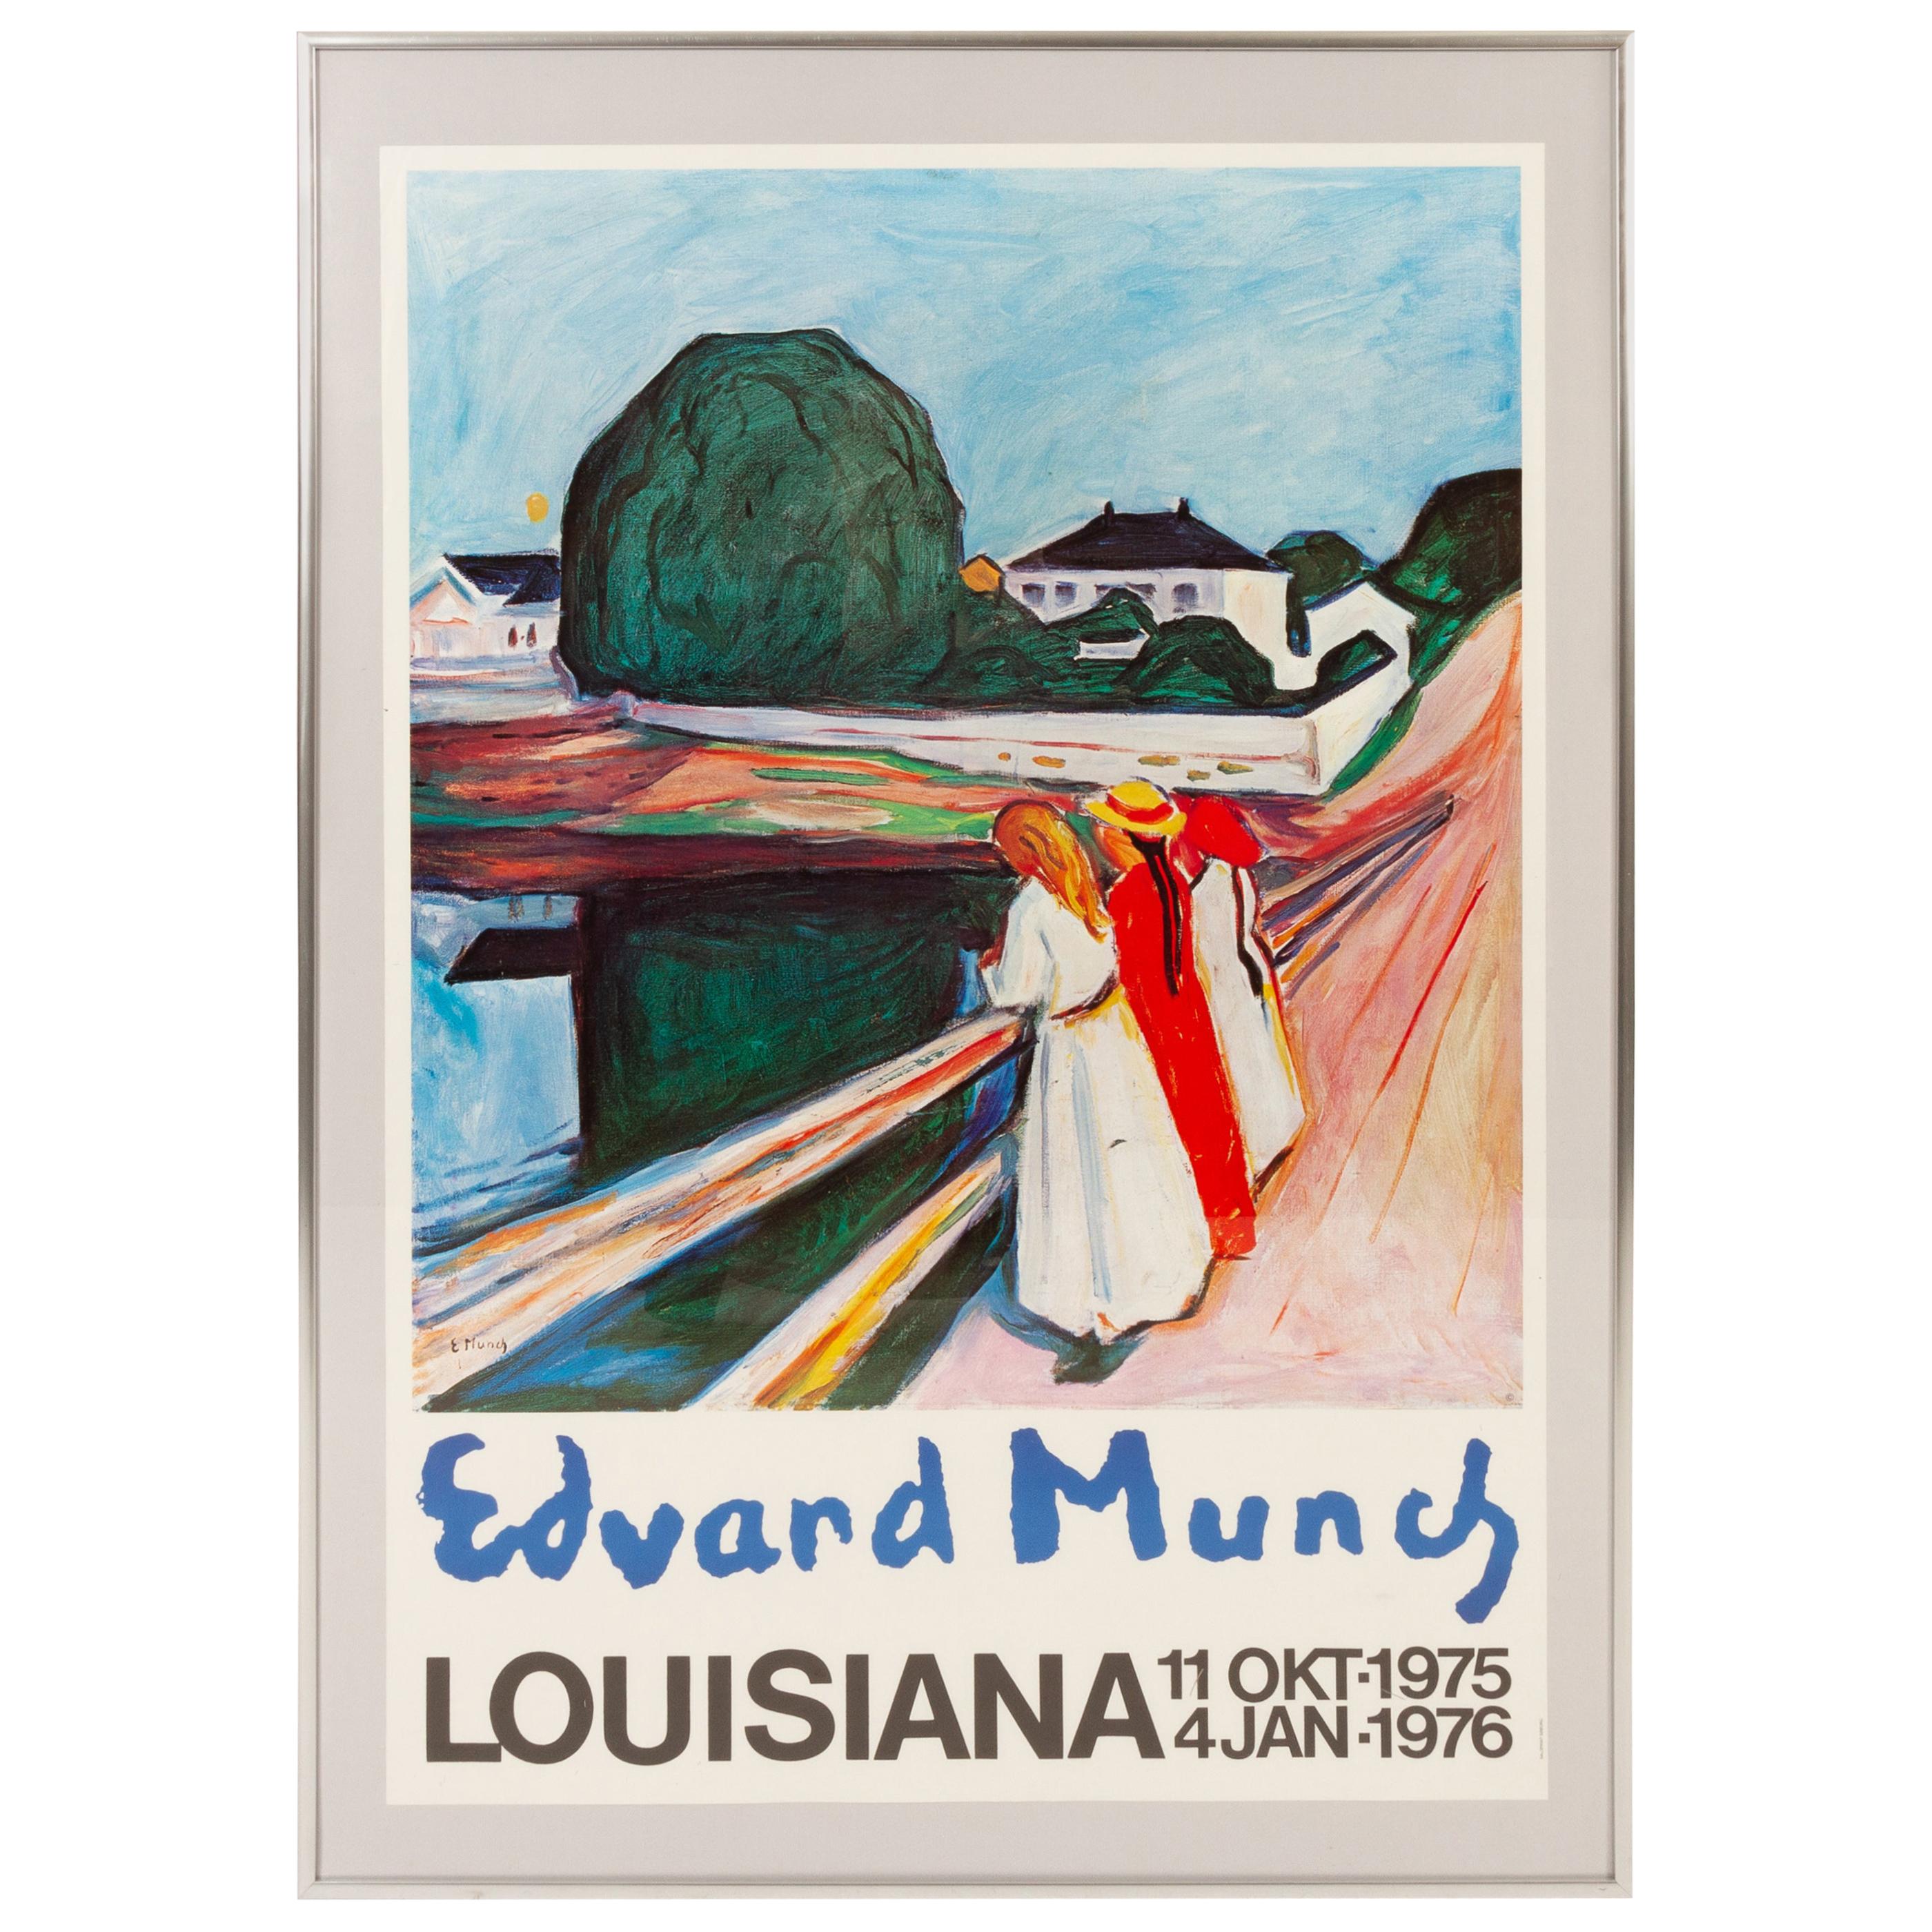 Original Vintage Edvard Munch Exhibition Poster, 1970s